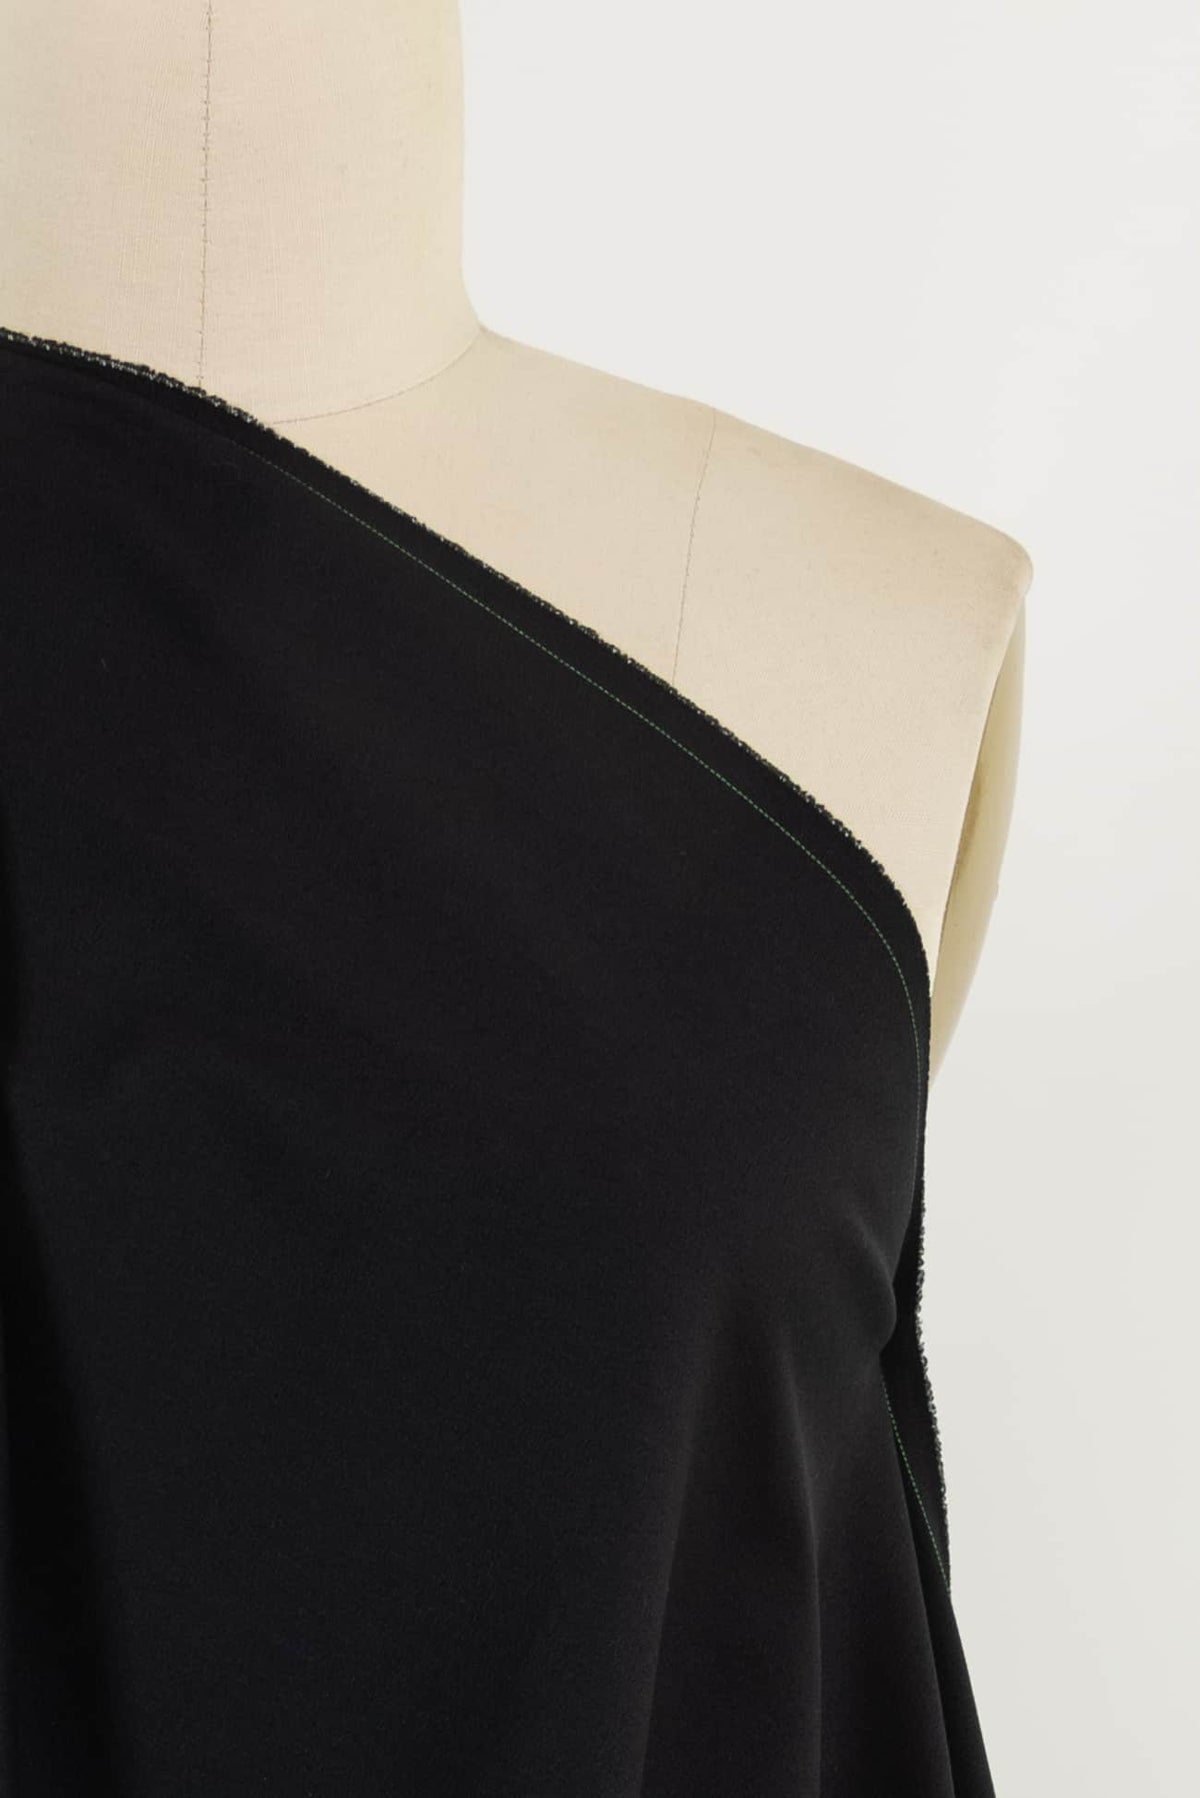 Charred Black Stretch Denim Woven - Marcy Tilton Fabrics